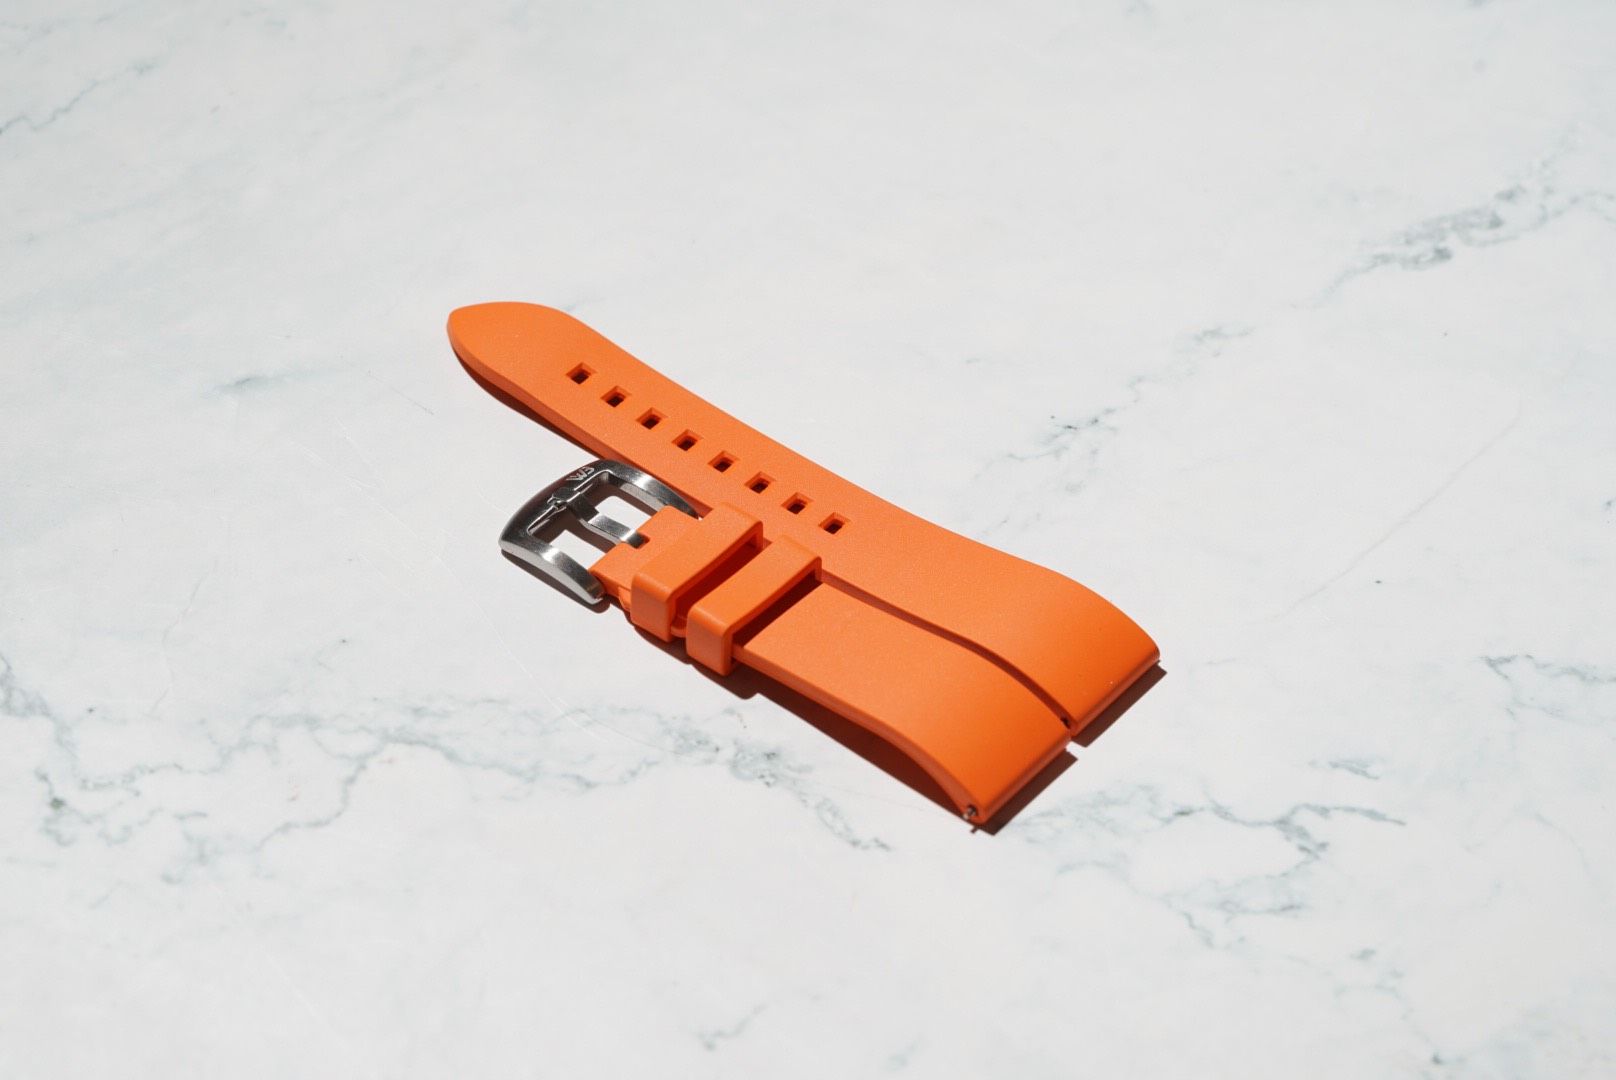 Classic Style Rubber Watch Strap – Orange